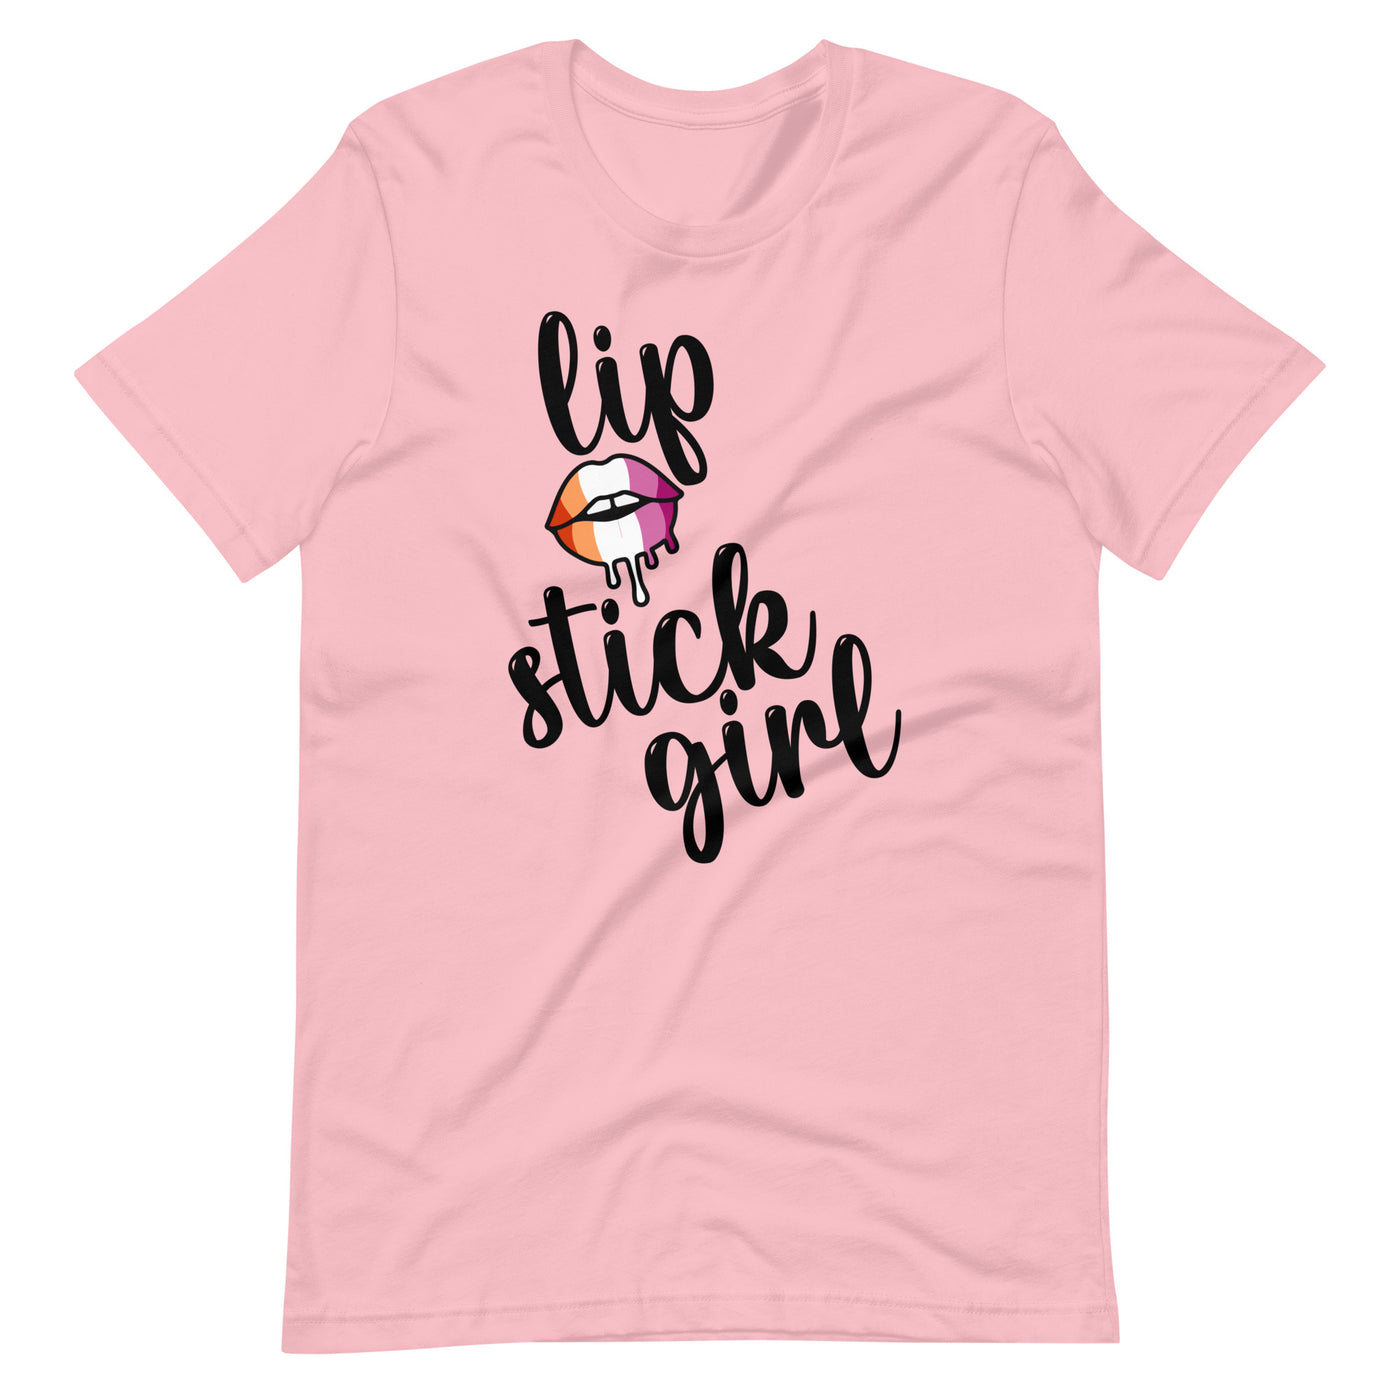 Pride Clothes - Fierce Fiery Femme Lip Stick Girl Lesbian Pride TShirt - Pink